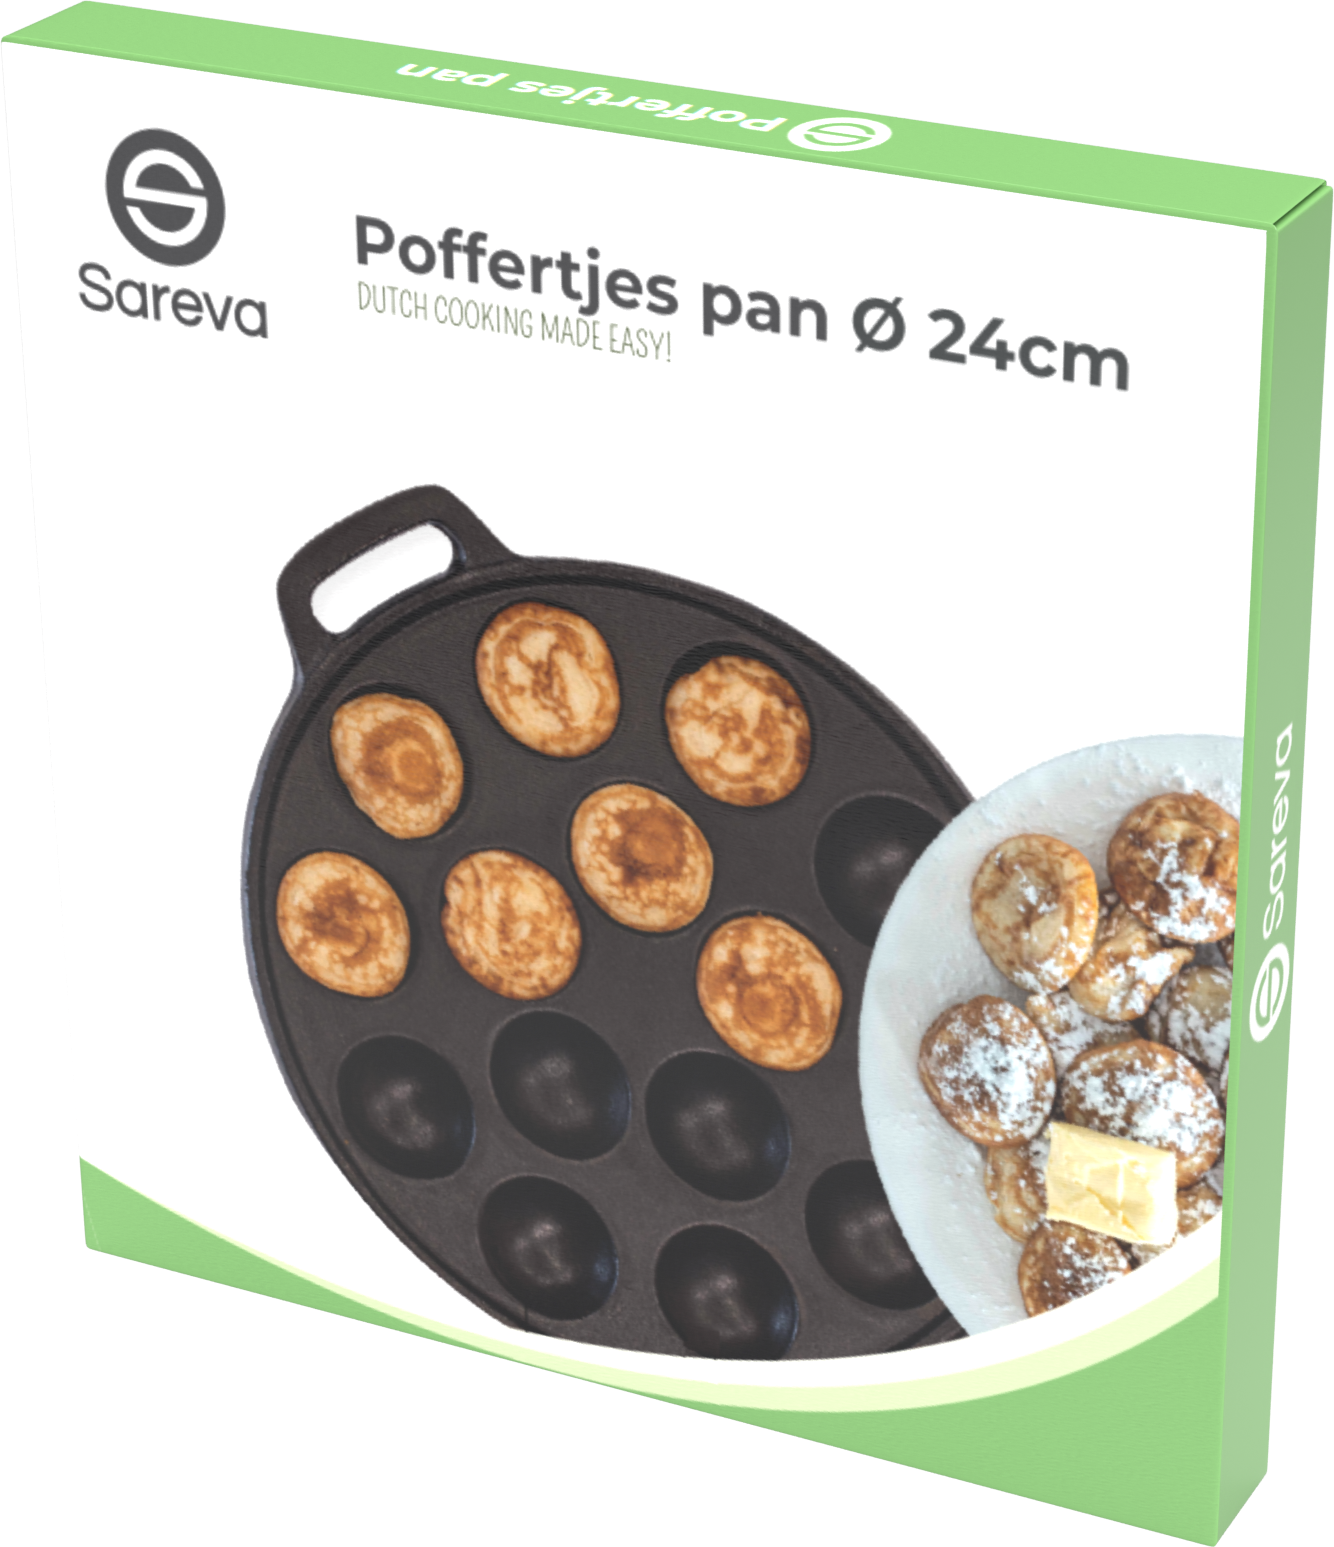 https://cdn2.zilvercms.nl/http://cookinglife.zilvercdn.nl/uploads/product/images/poffertjespan-Package-New.png